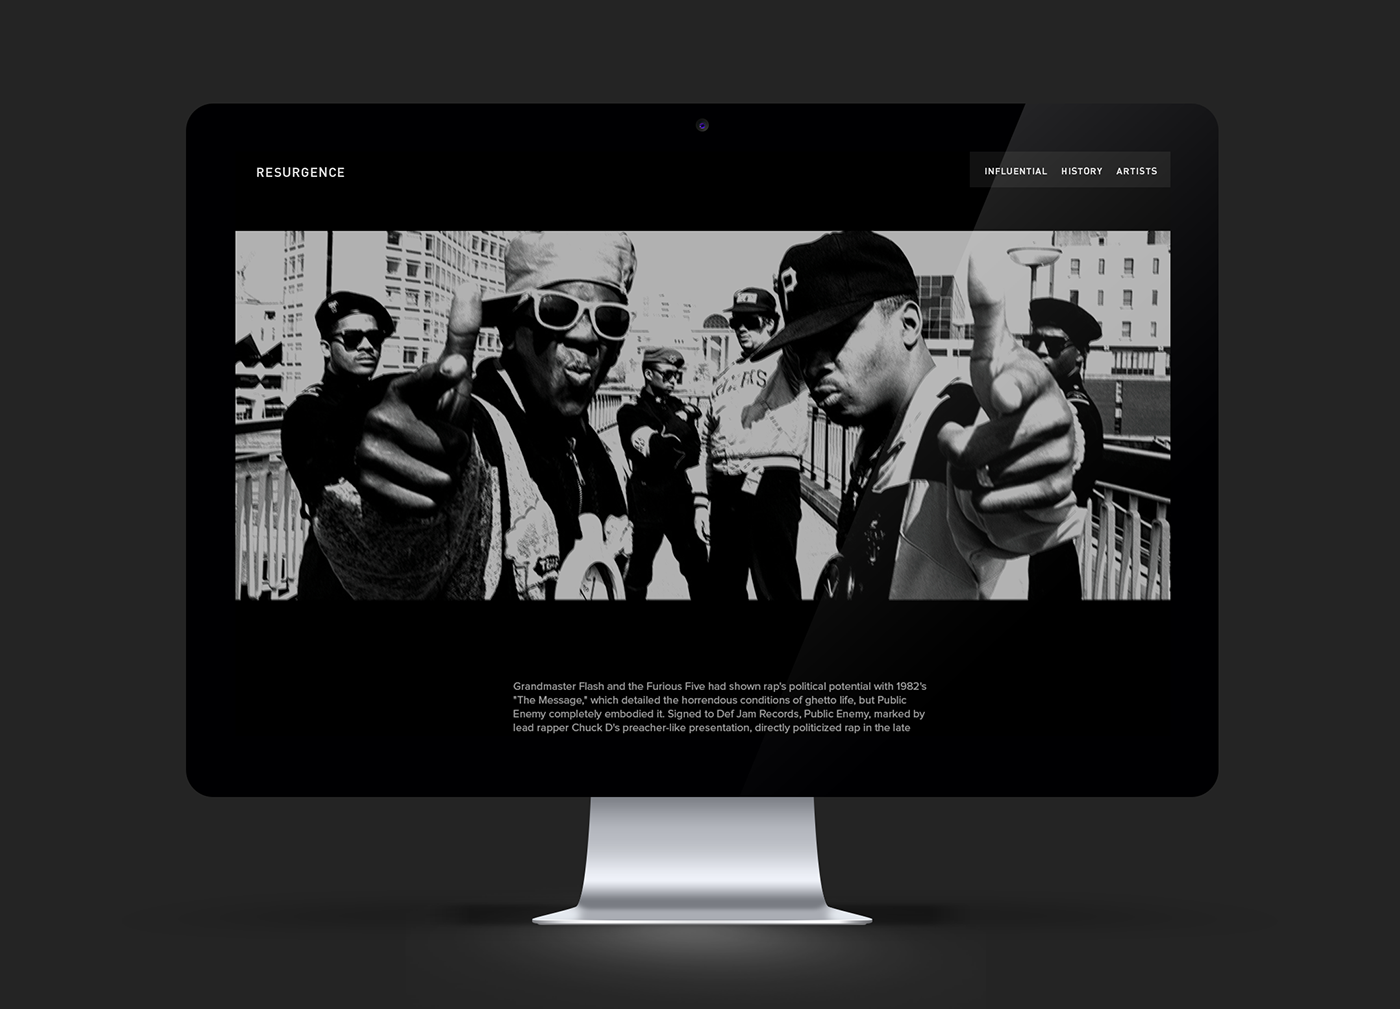 hip hop Street nas tupac Queen Latifah 2pac history Resurgence movement rap R&B society posters empowerment change